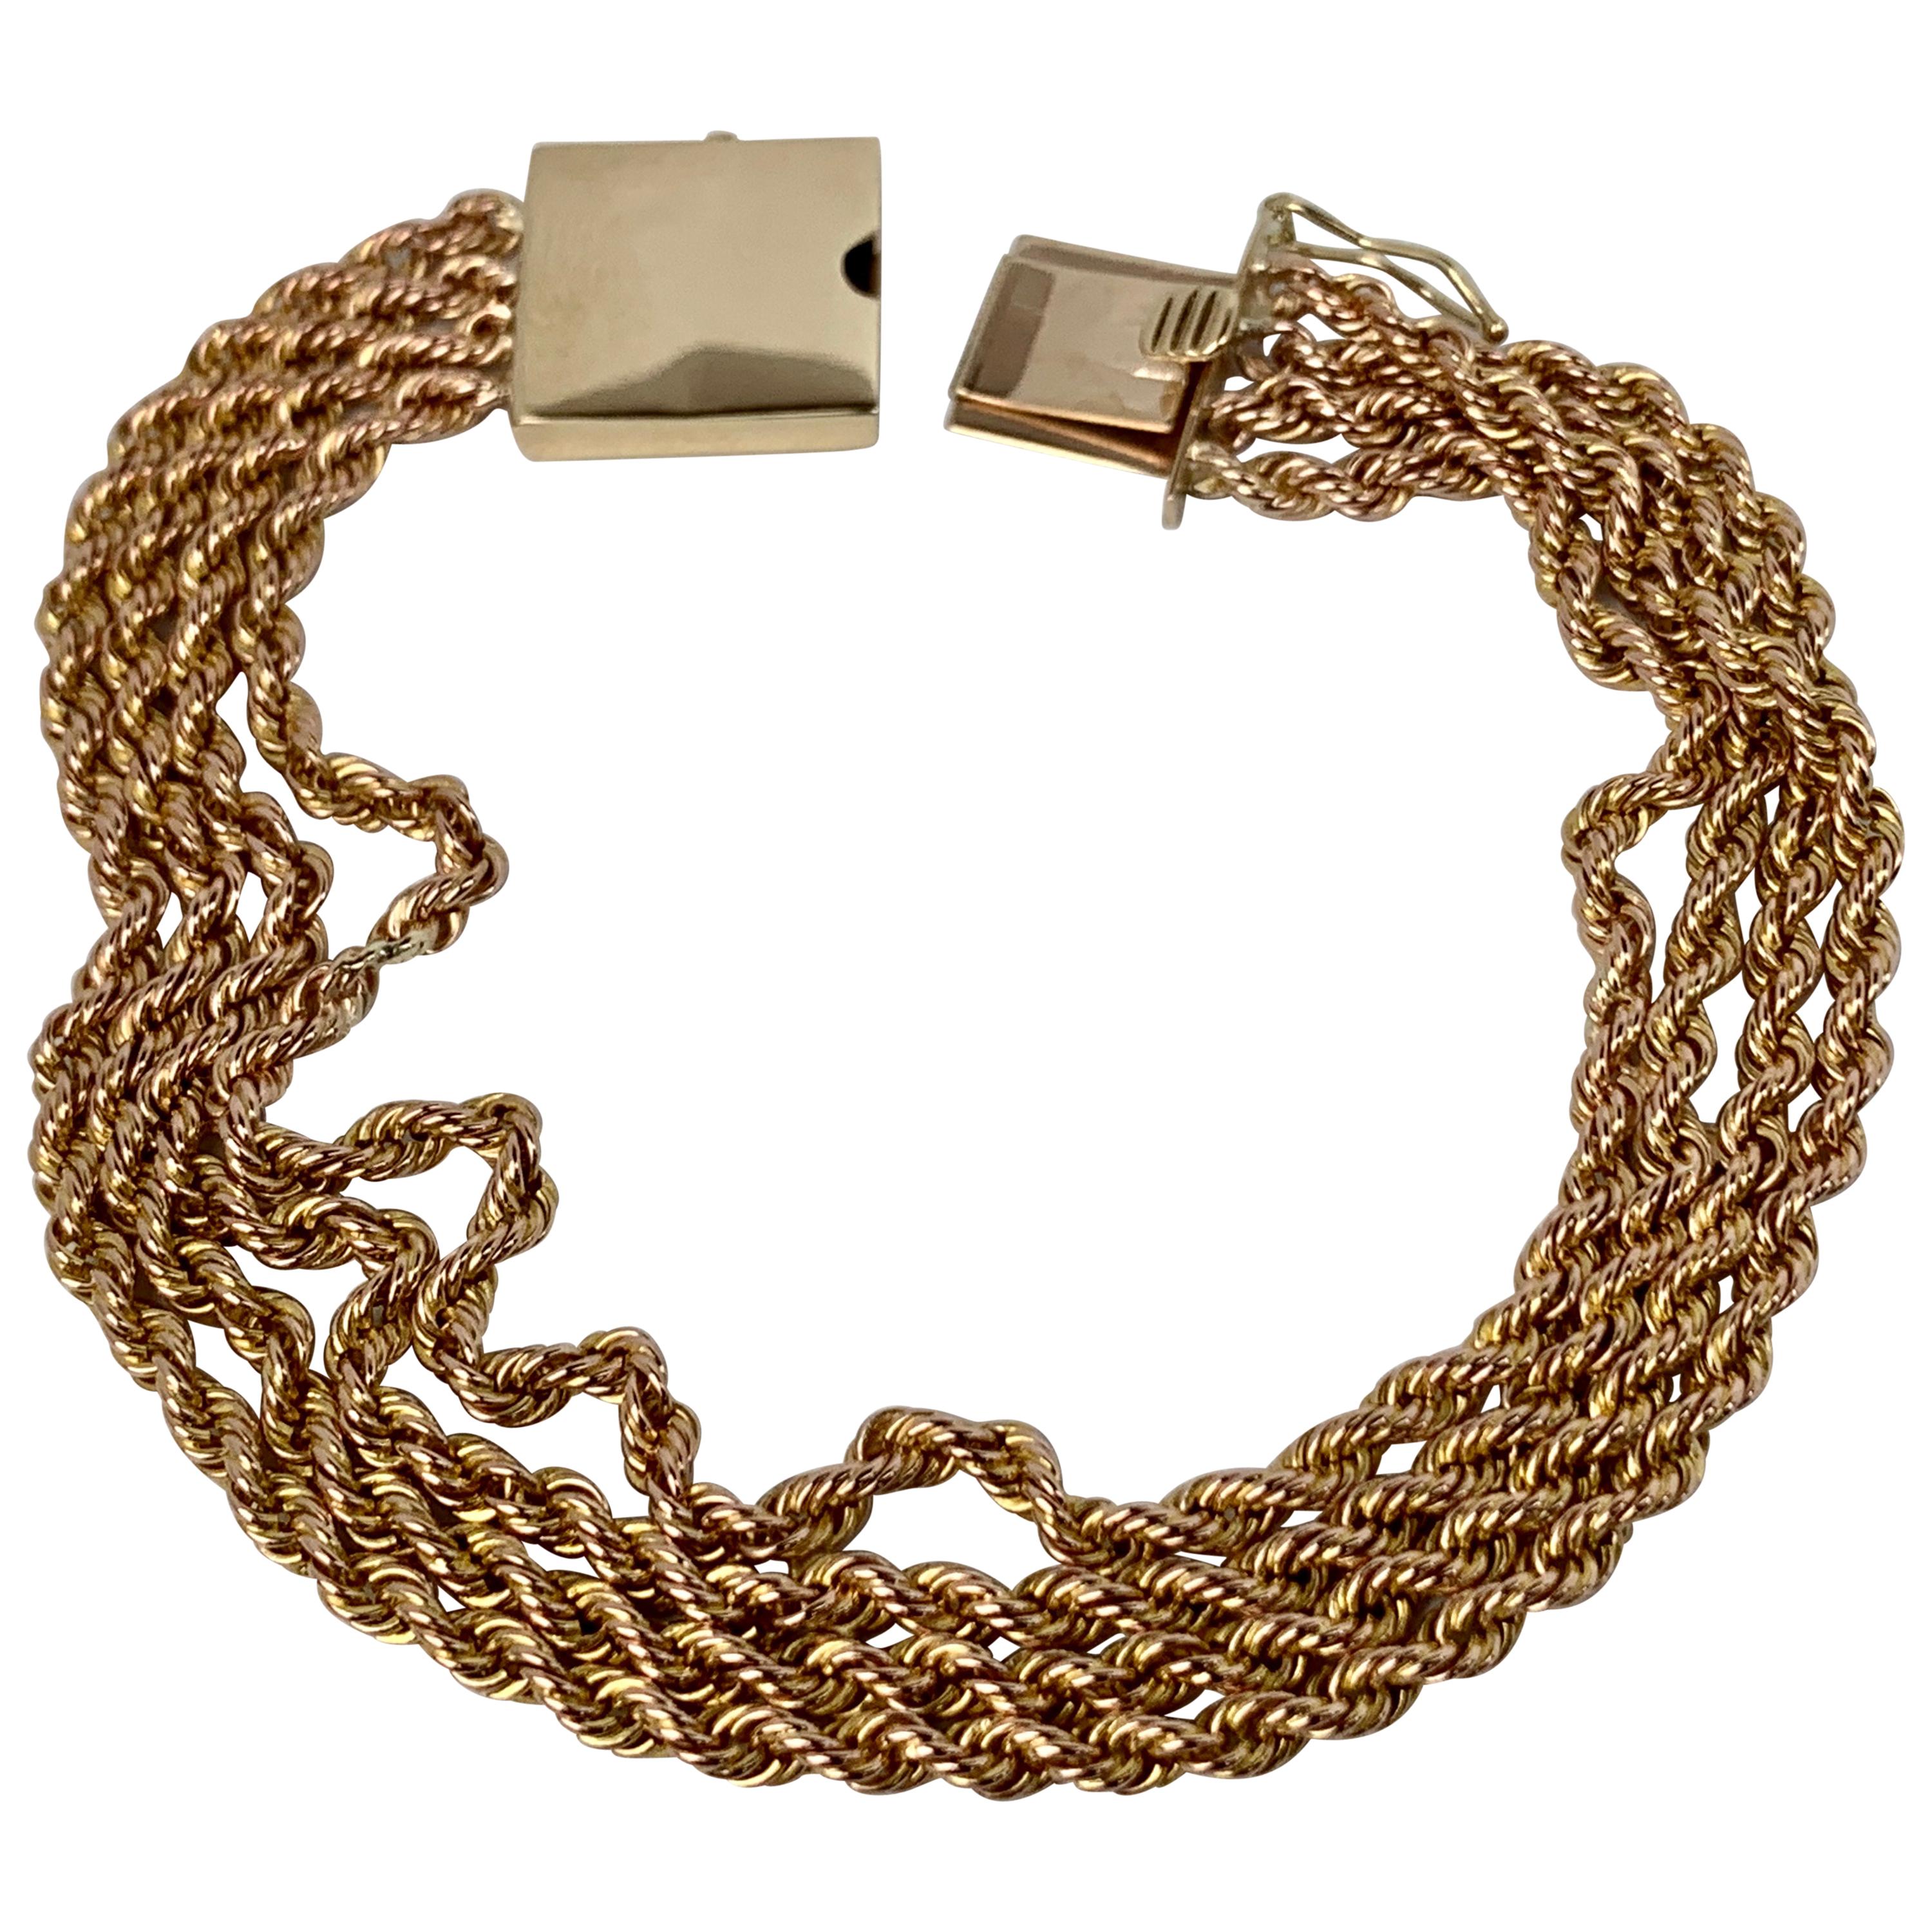  Rope Chain Bracelet Custom Made with Square Plaque Lock 14 Karat Gold 